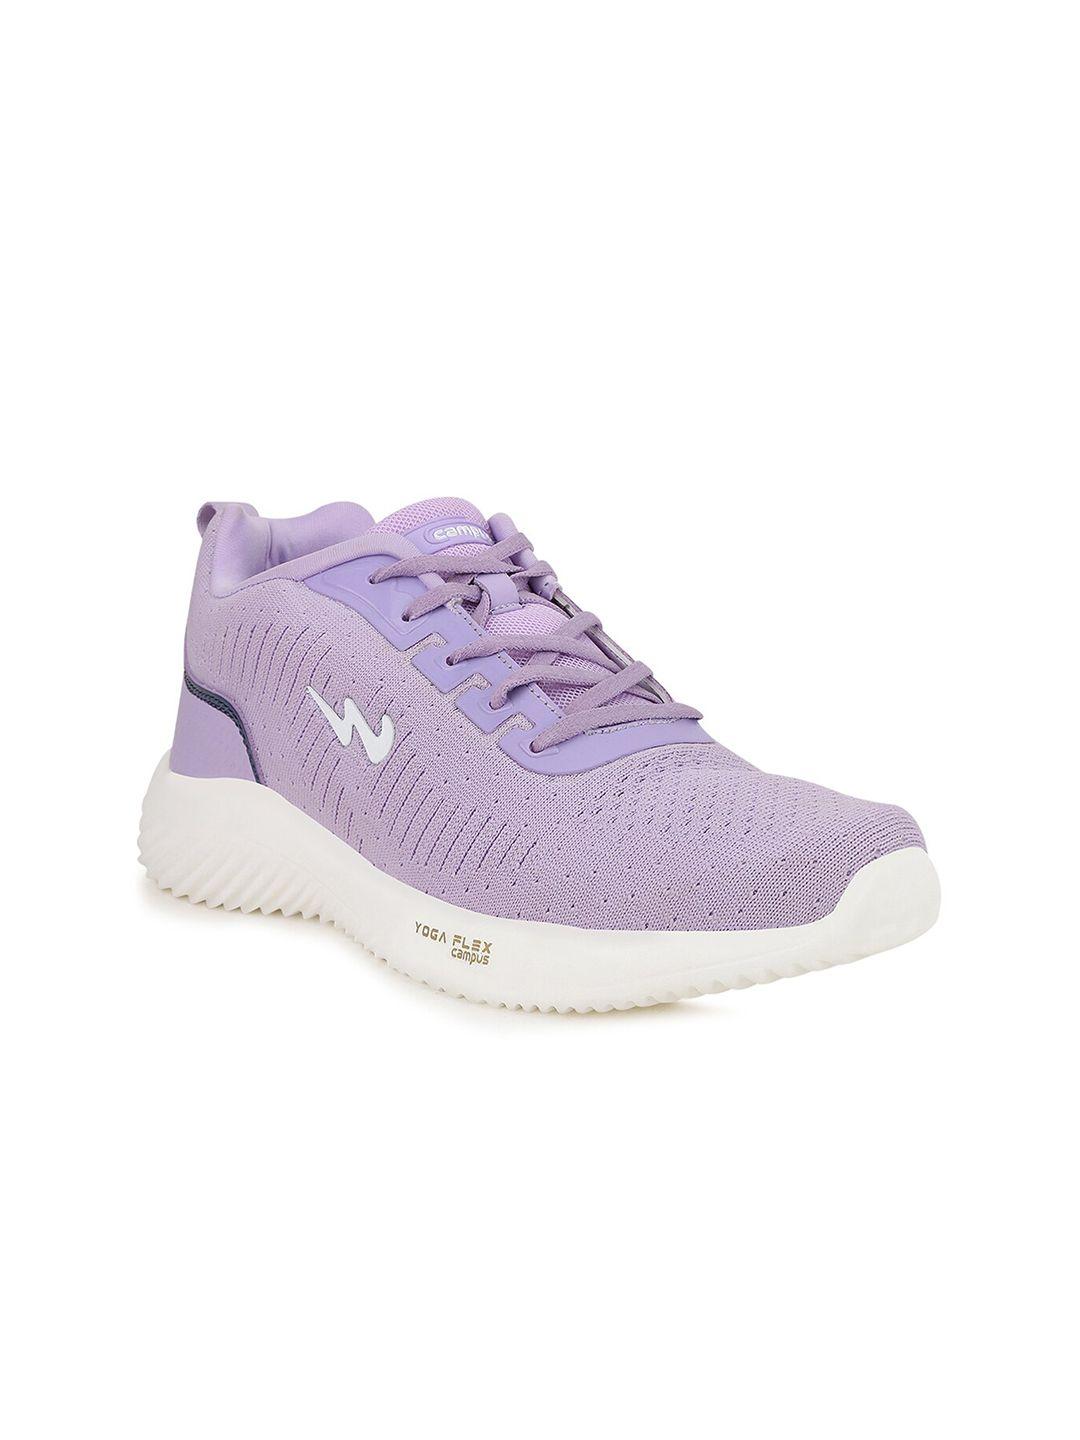 campus-women-purple-mesh-running-shoes